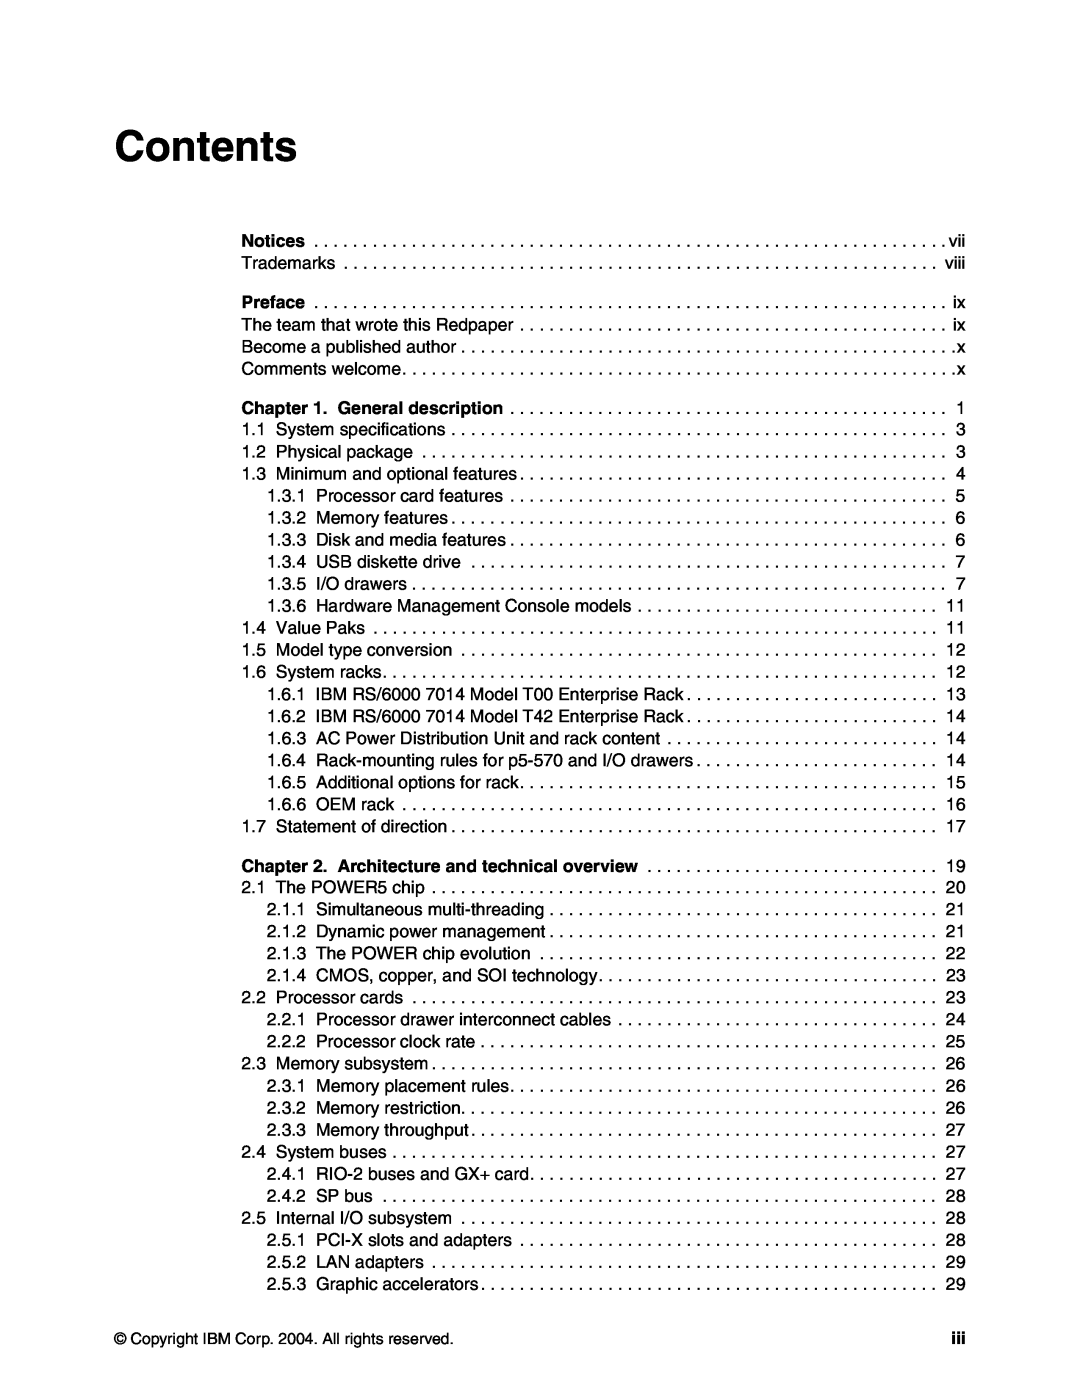 IBM P5 570 manual Contents 